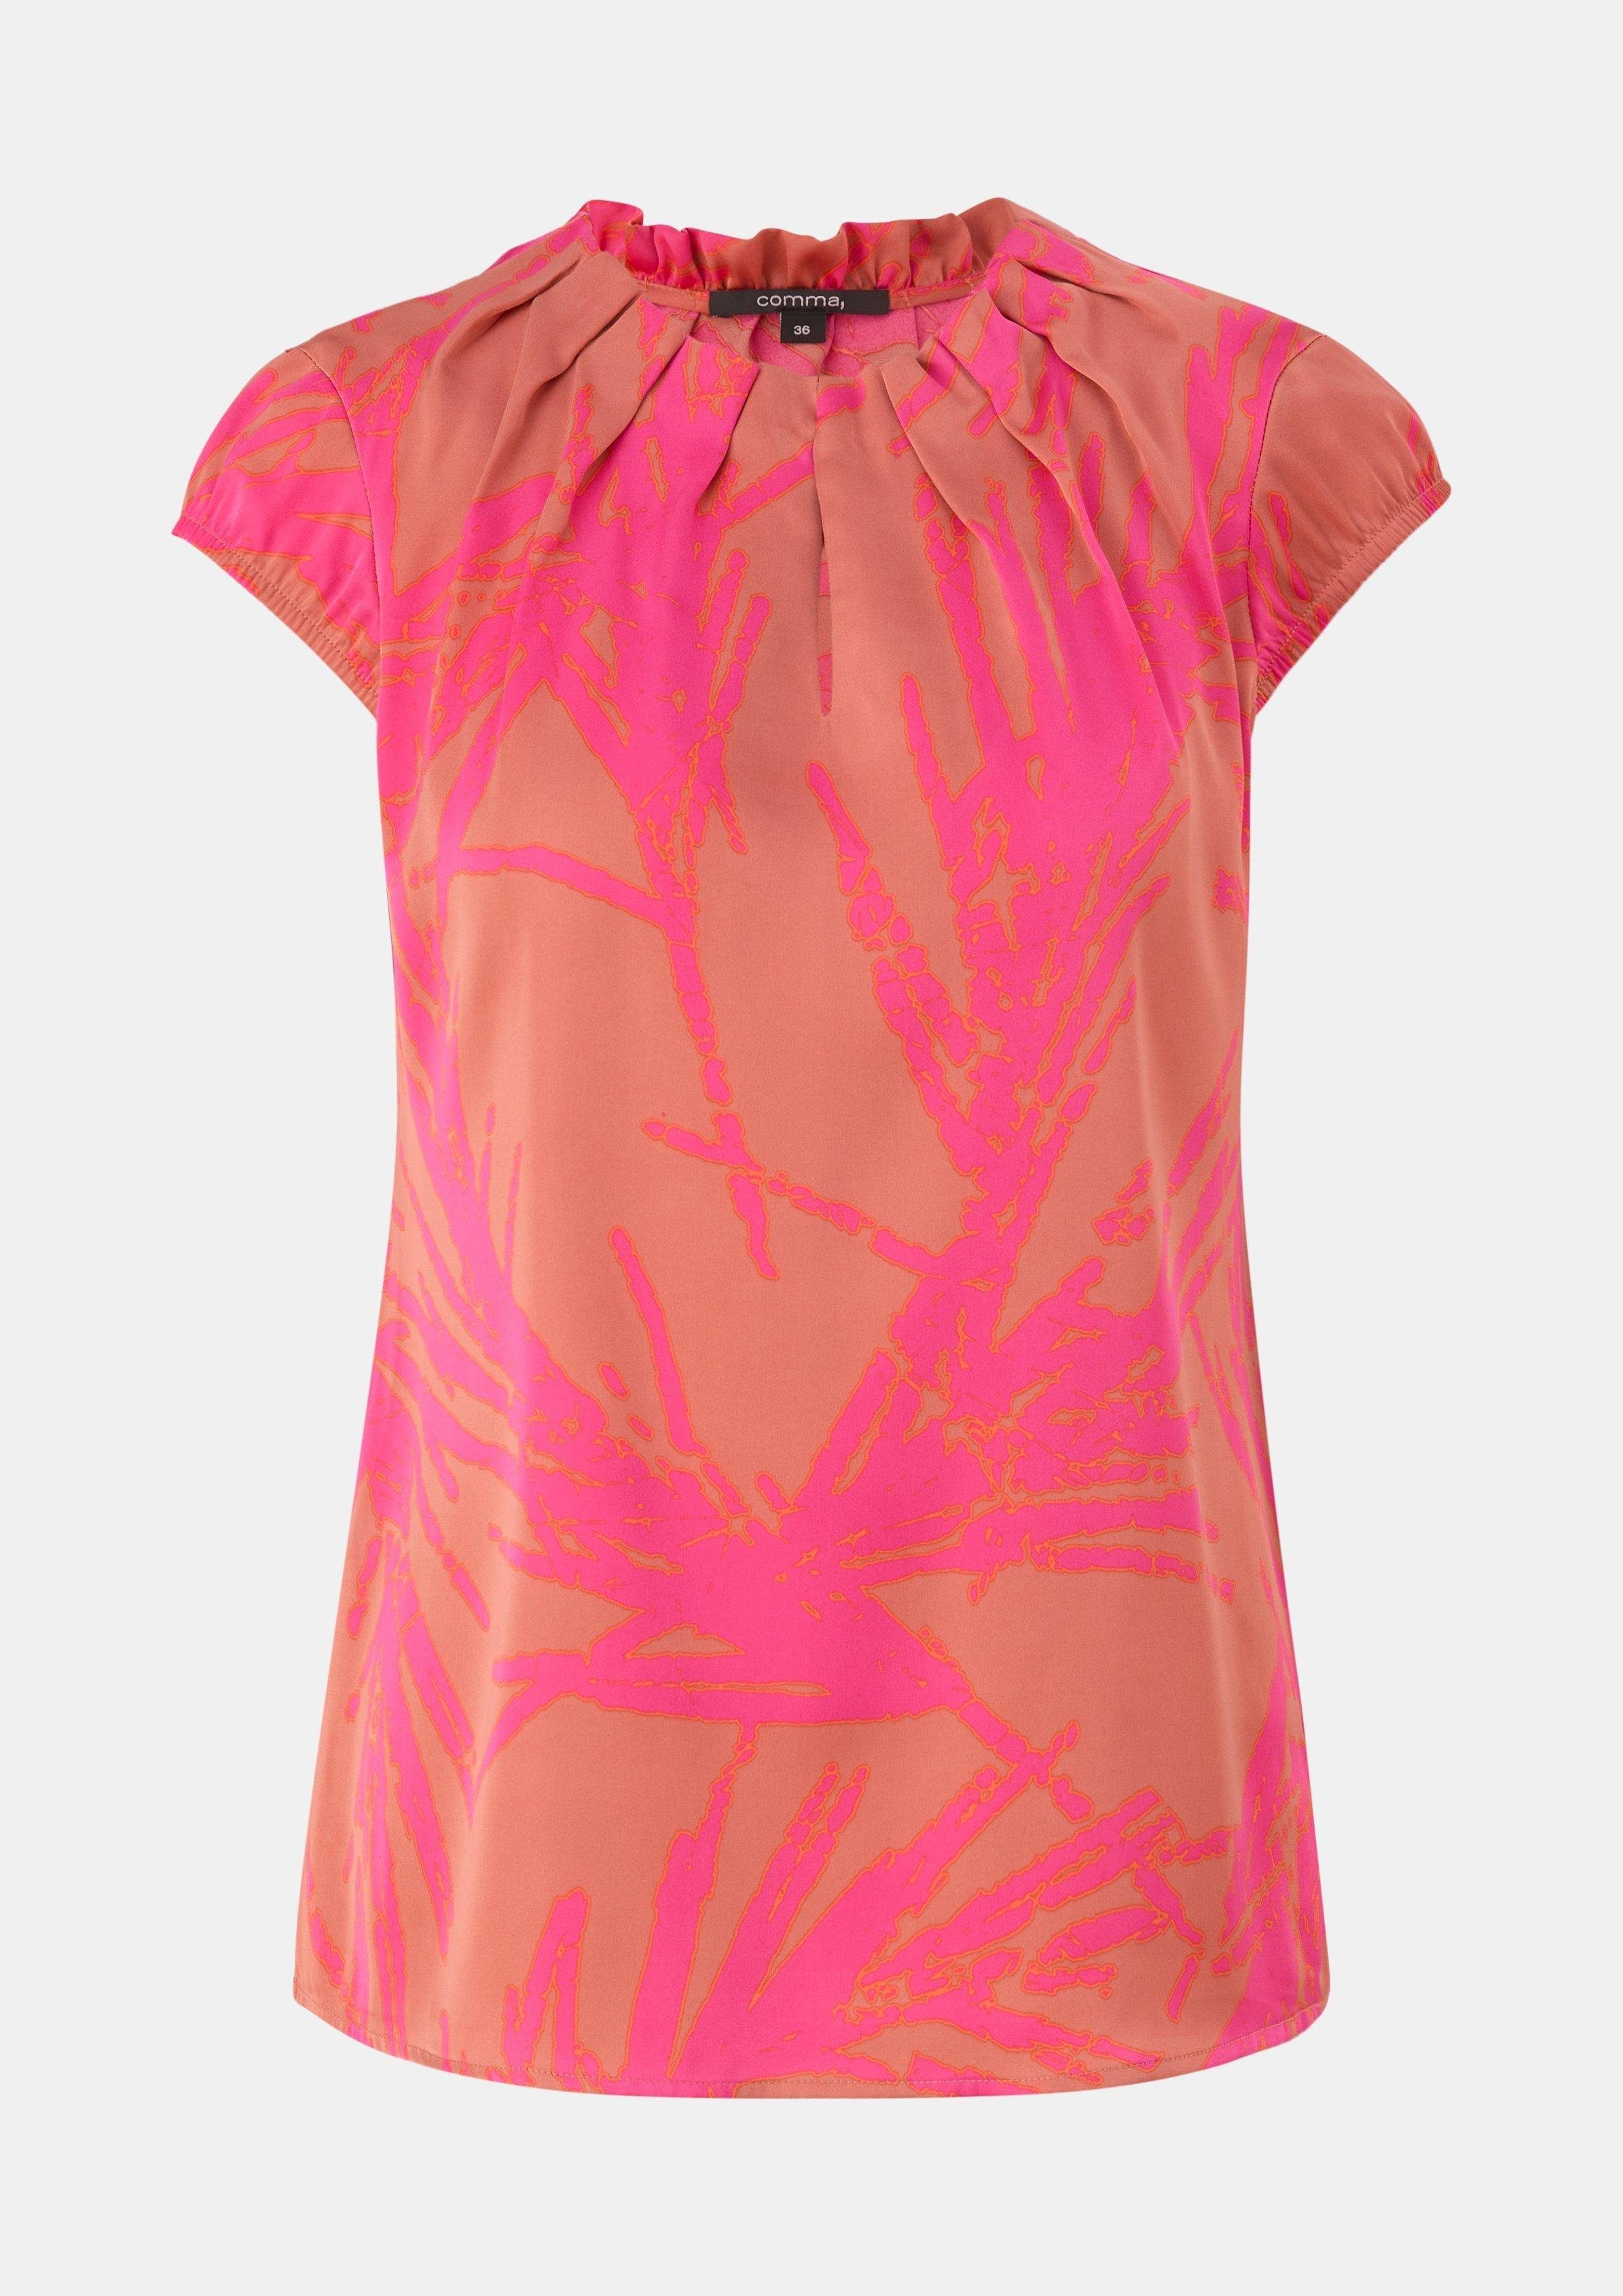 All-over-Print Raffung pink Comma mit Kurzarmbluse Bluse